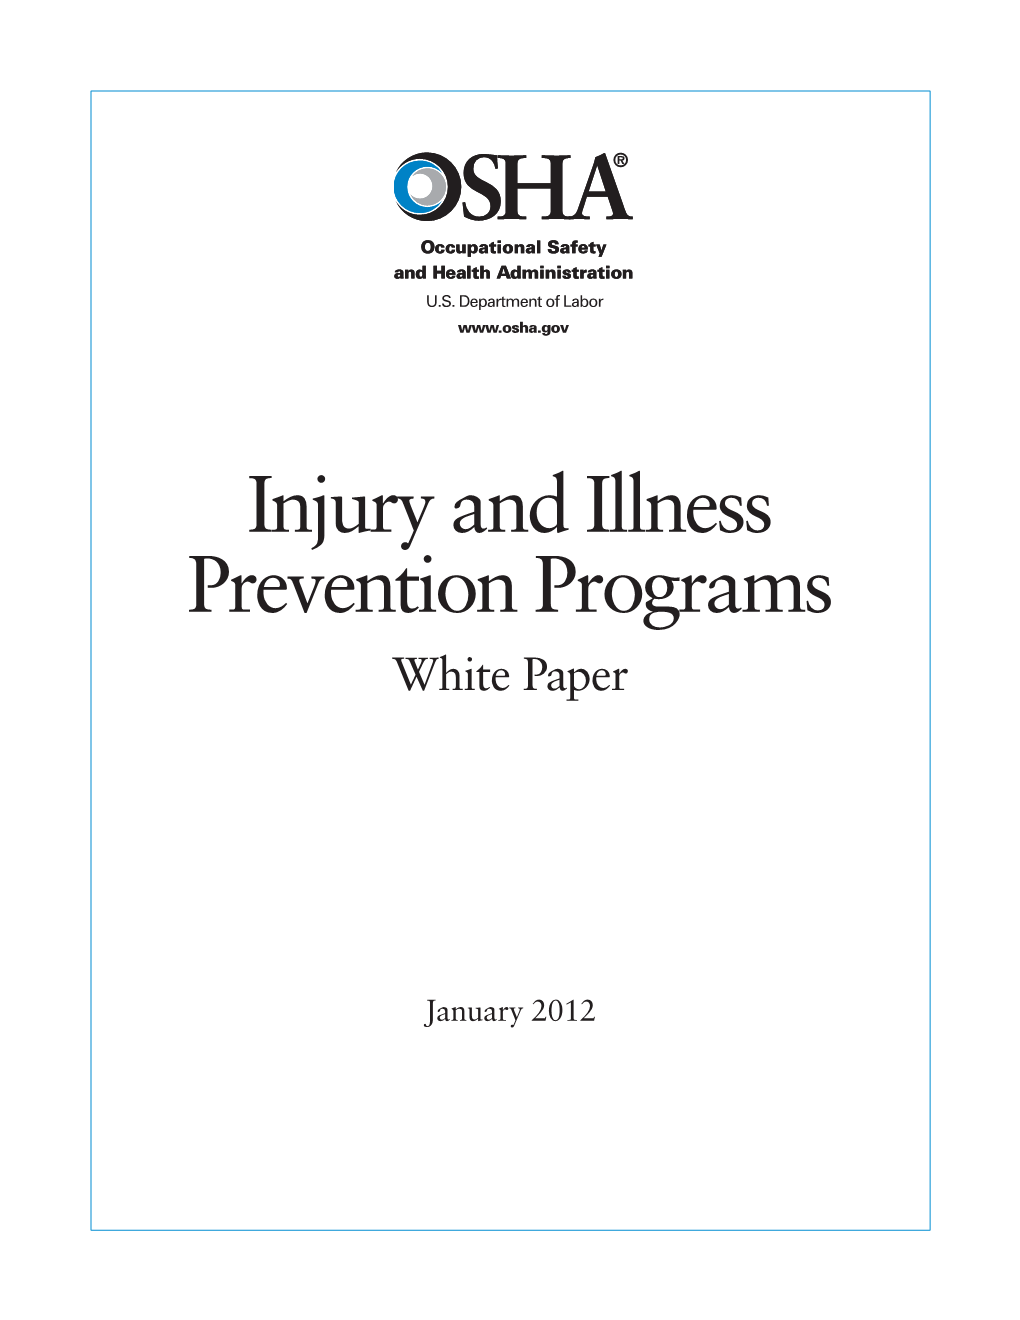 OSHA Injury and Illness Prevention Program White Paper